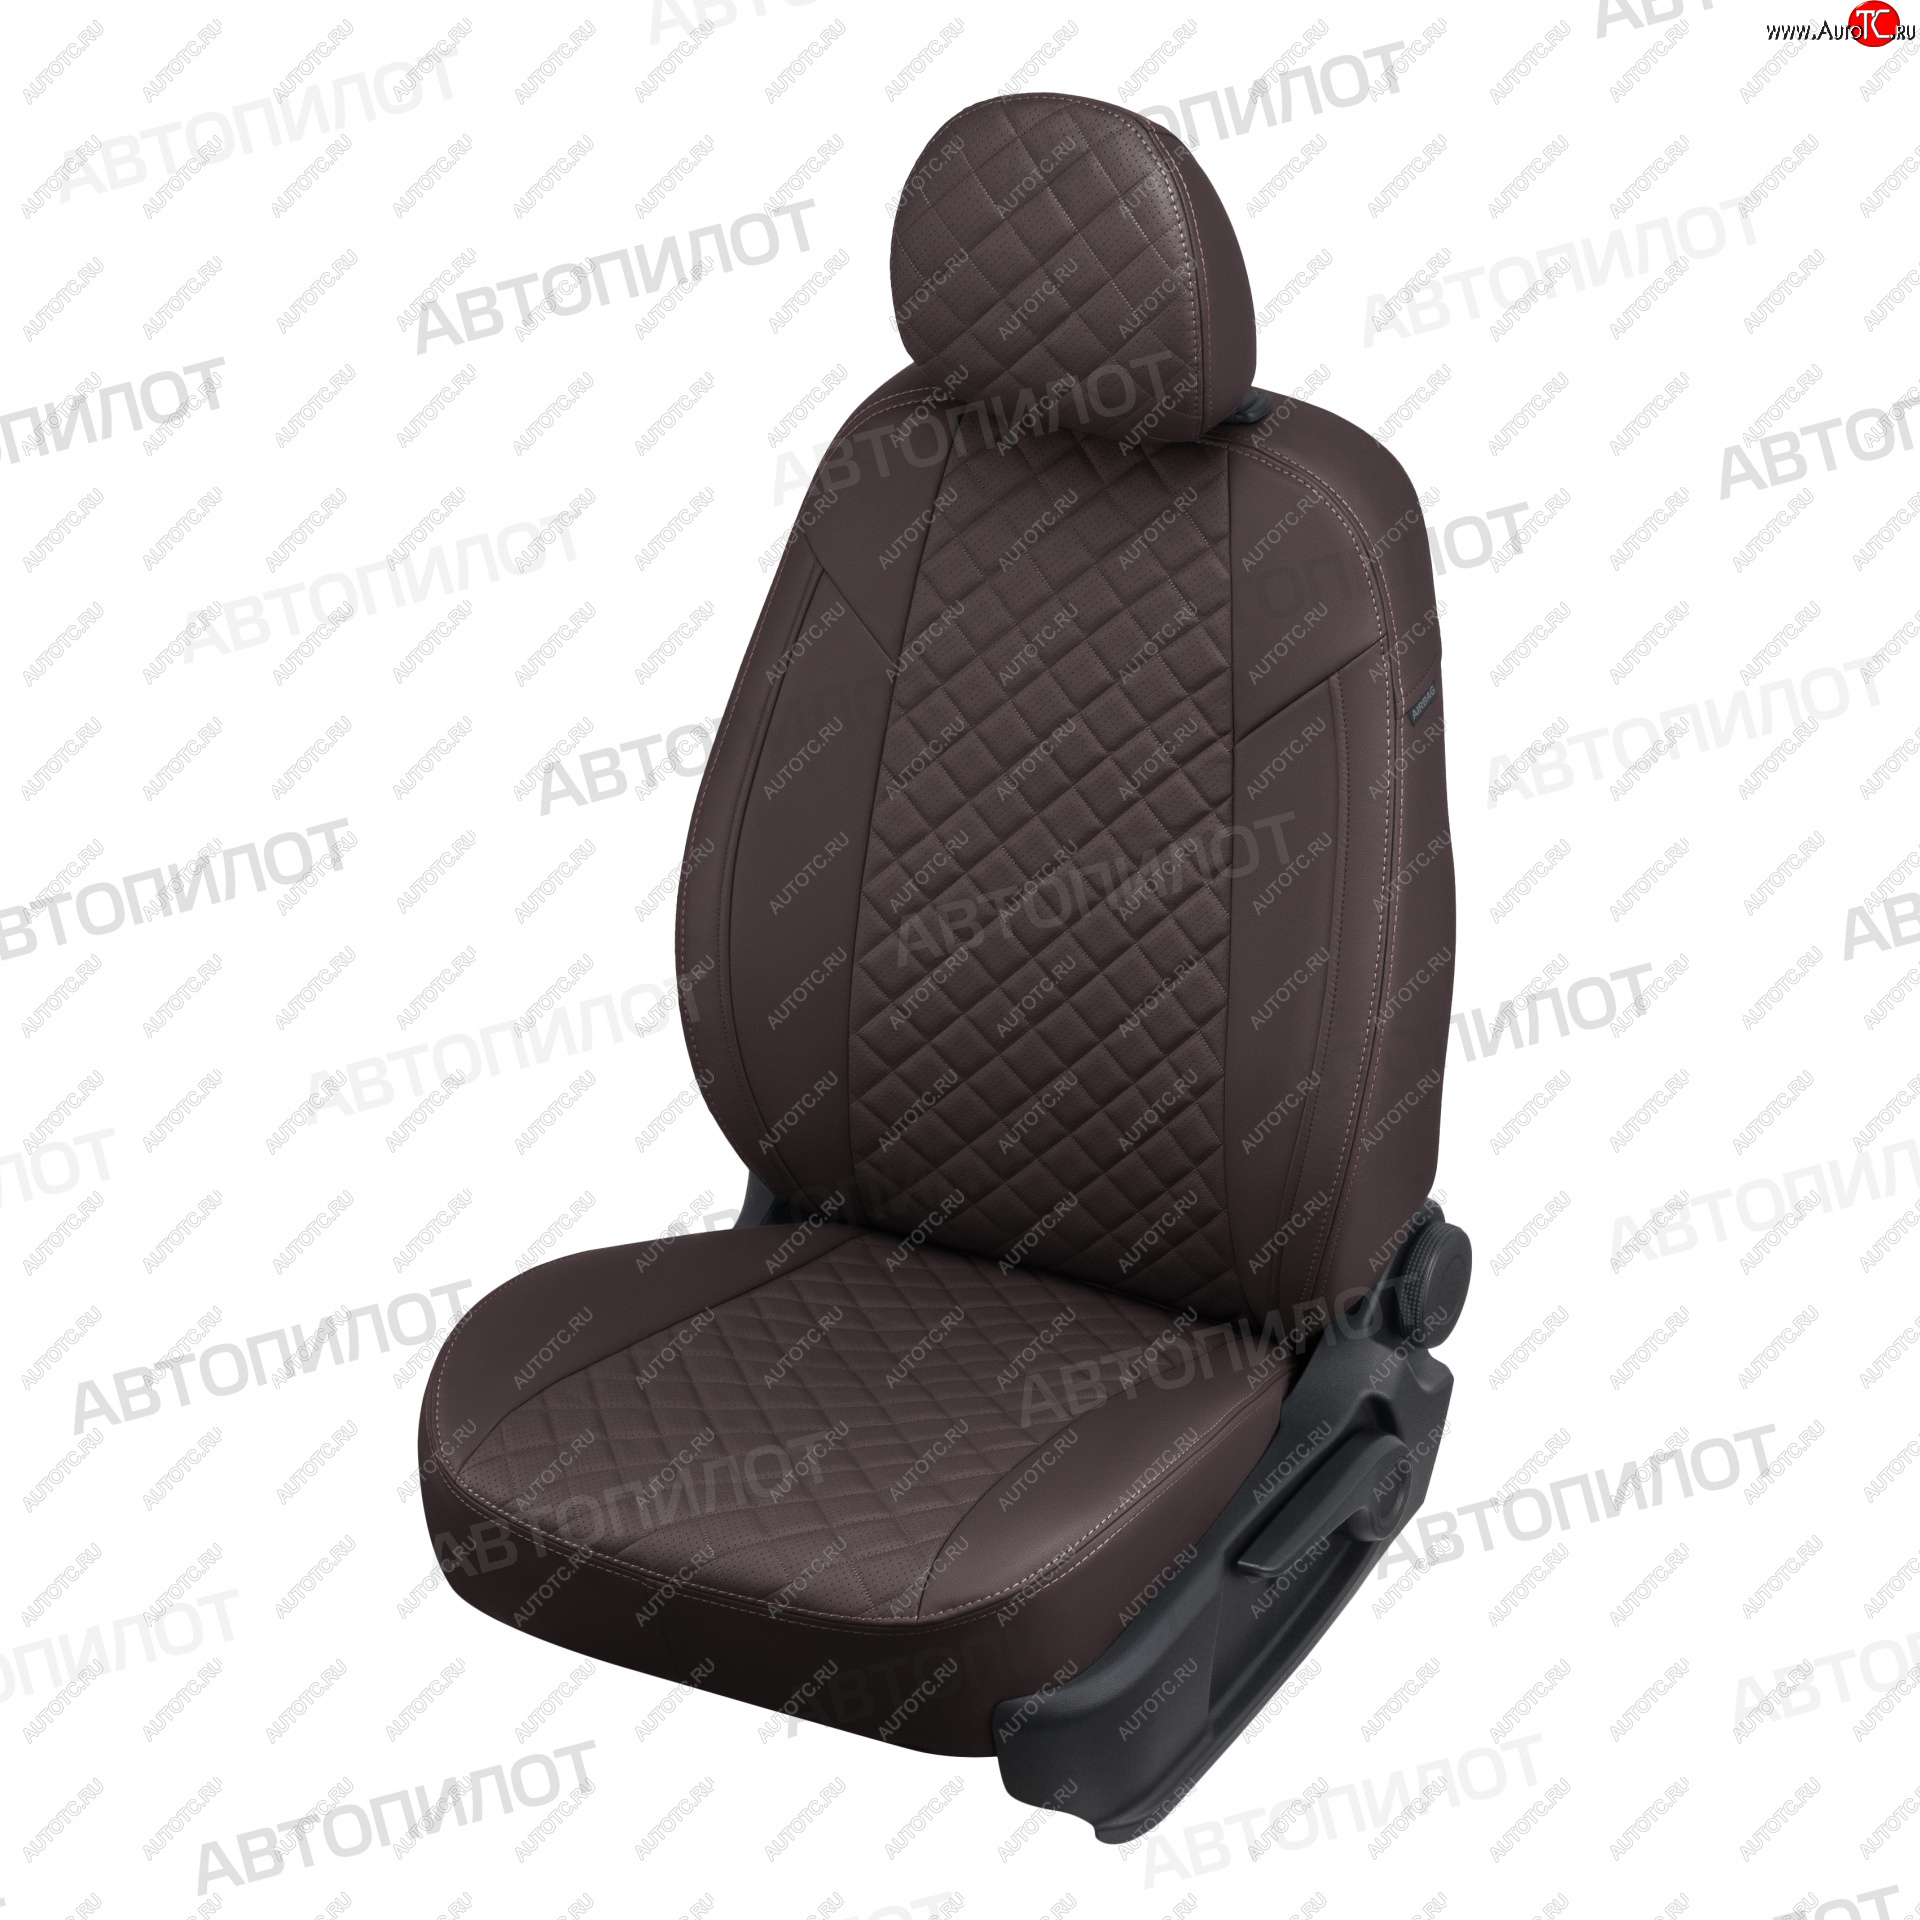 13 999 р. Чехлы сидений (экокожа) Автопилот Ромб  Honda CR-V  RD4,RD5,RD6,RD7,RD9  (2001-2006) (шоколад)